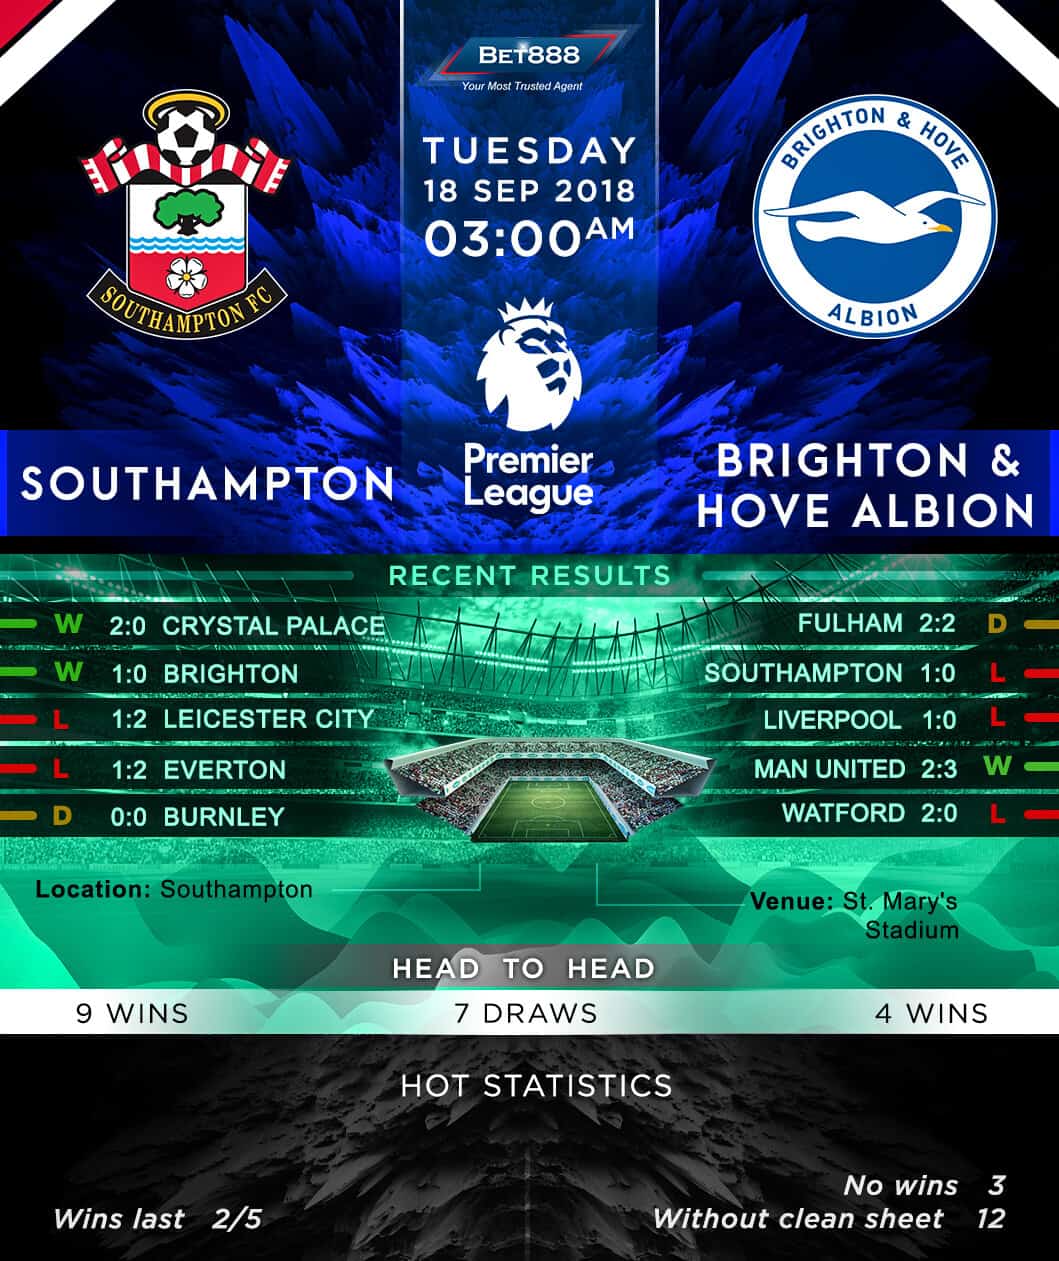 Southampton vs Brighton & Hove Albion 18/09/18